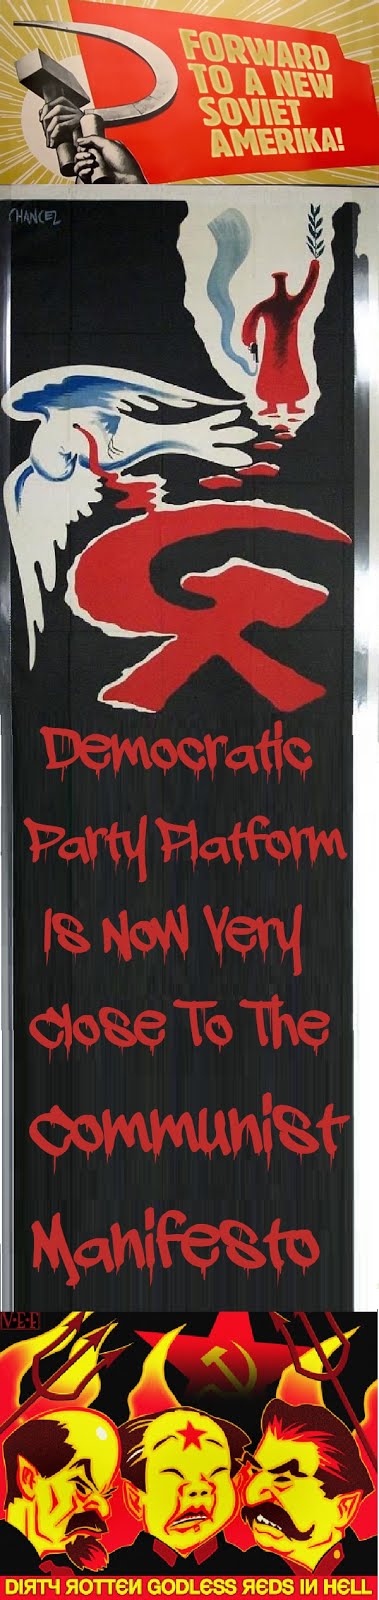 DNC Platform or Communist Manifesto?